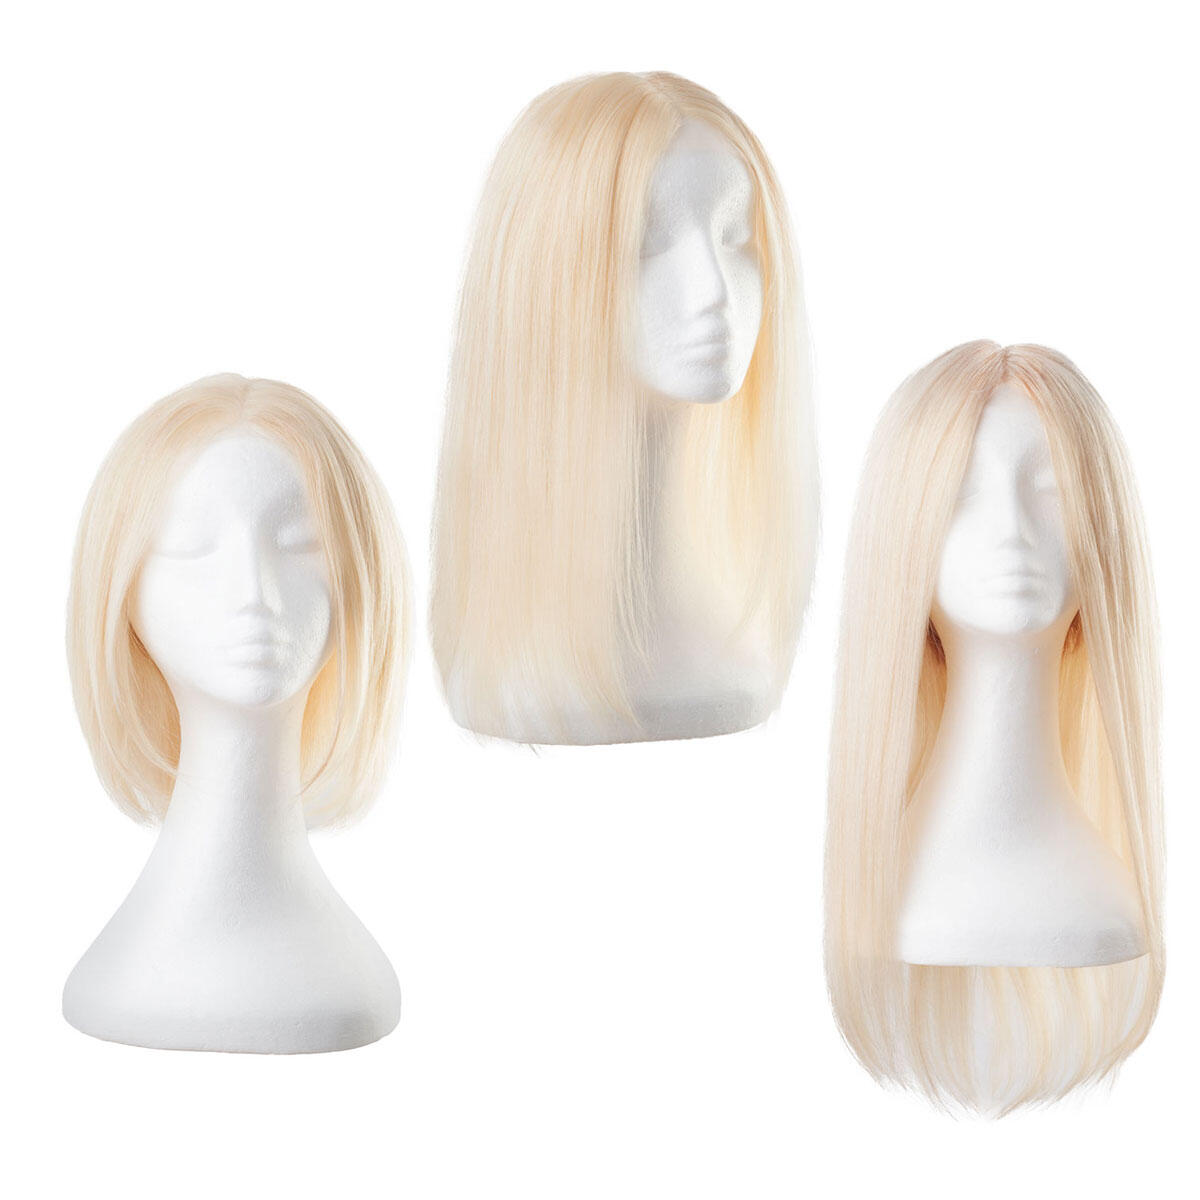 Lace Wig Human Hair 10.8 Light Blonde 55 cm